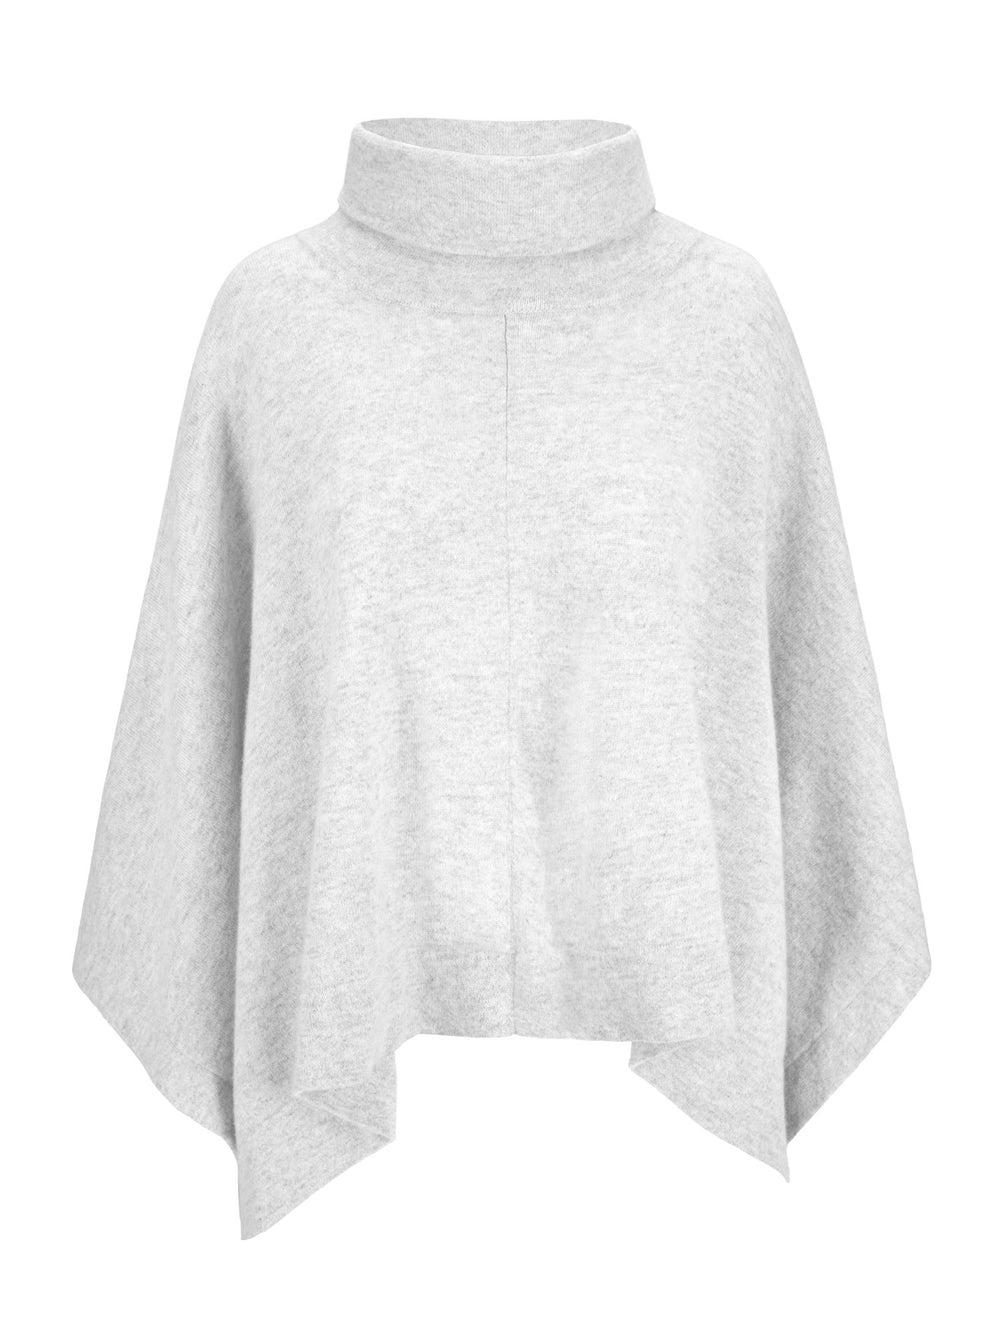 cashmere poncho, turtle neck, light grey in 100% pure cashmere. Scandinavian design.  Edit alt text